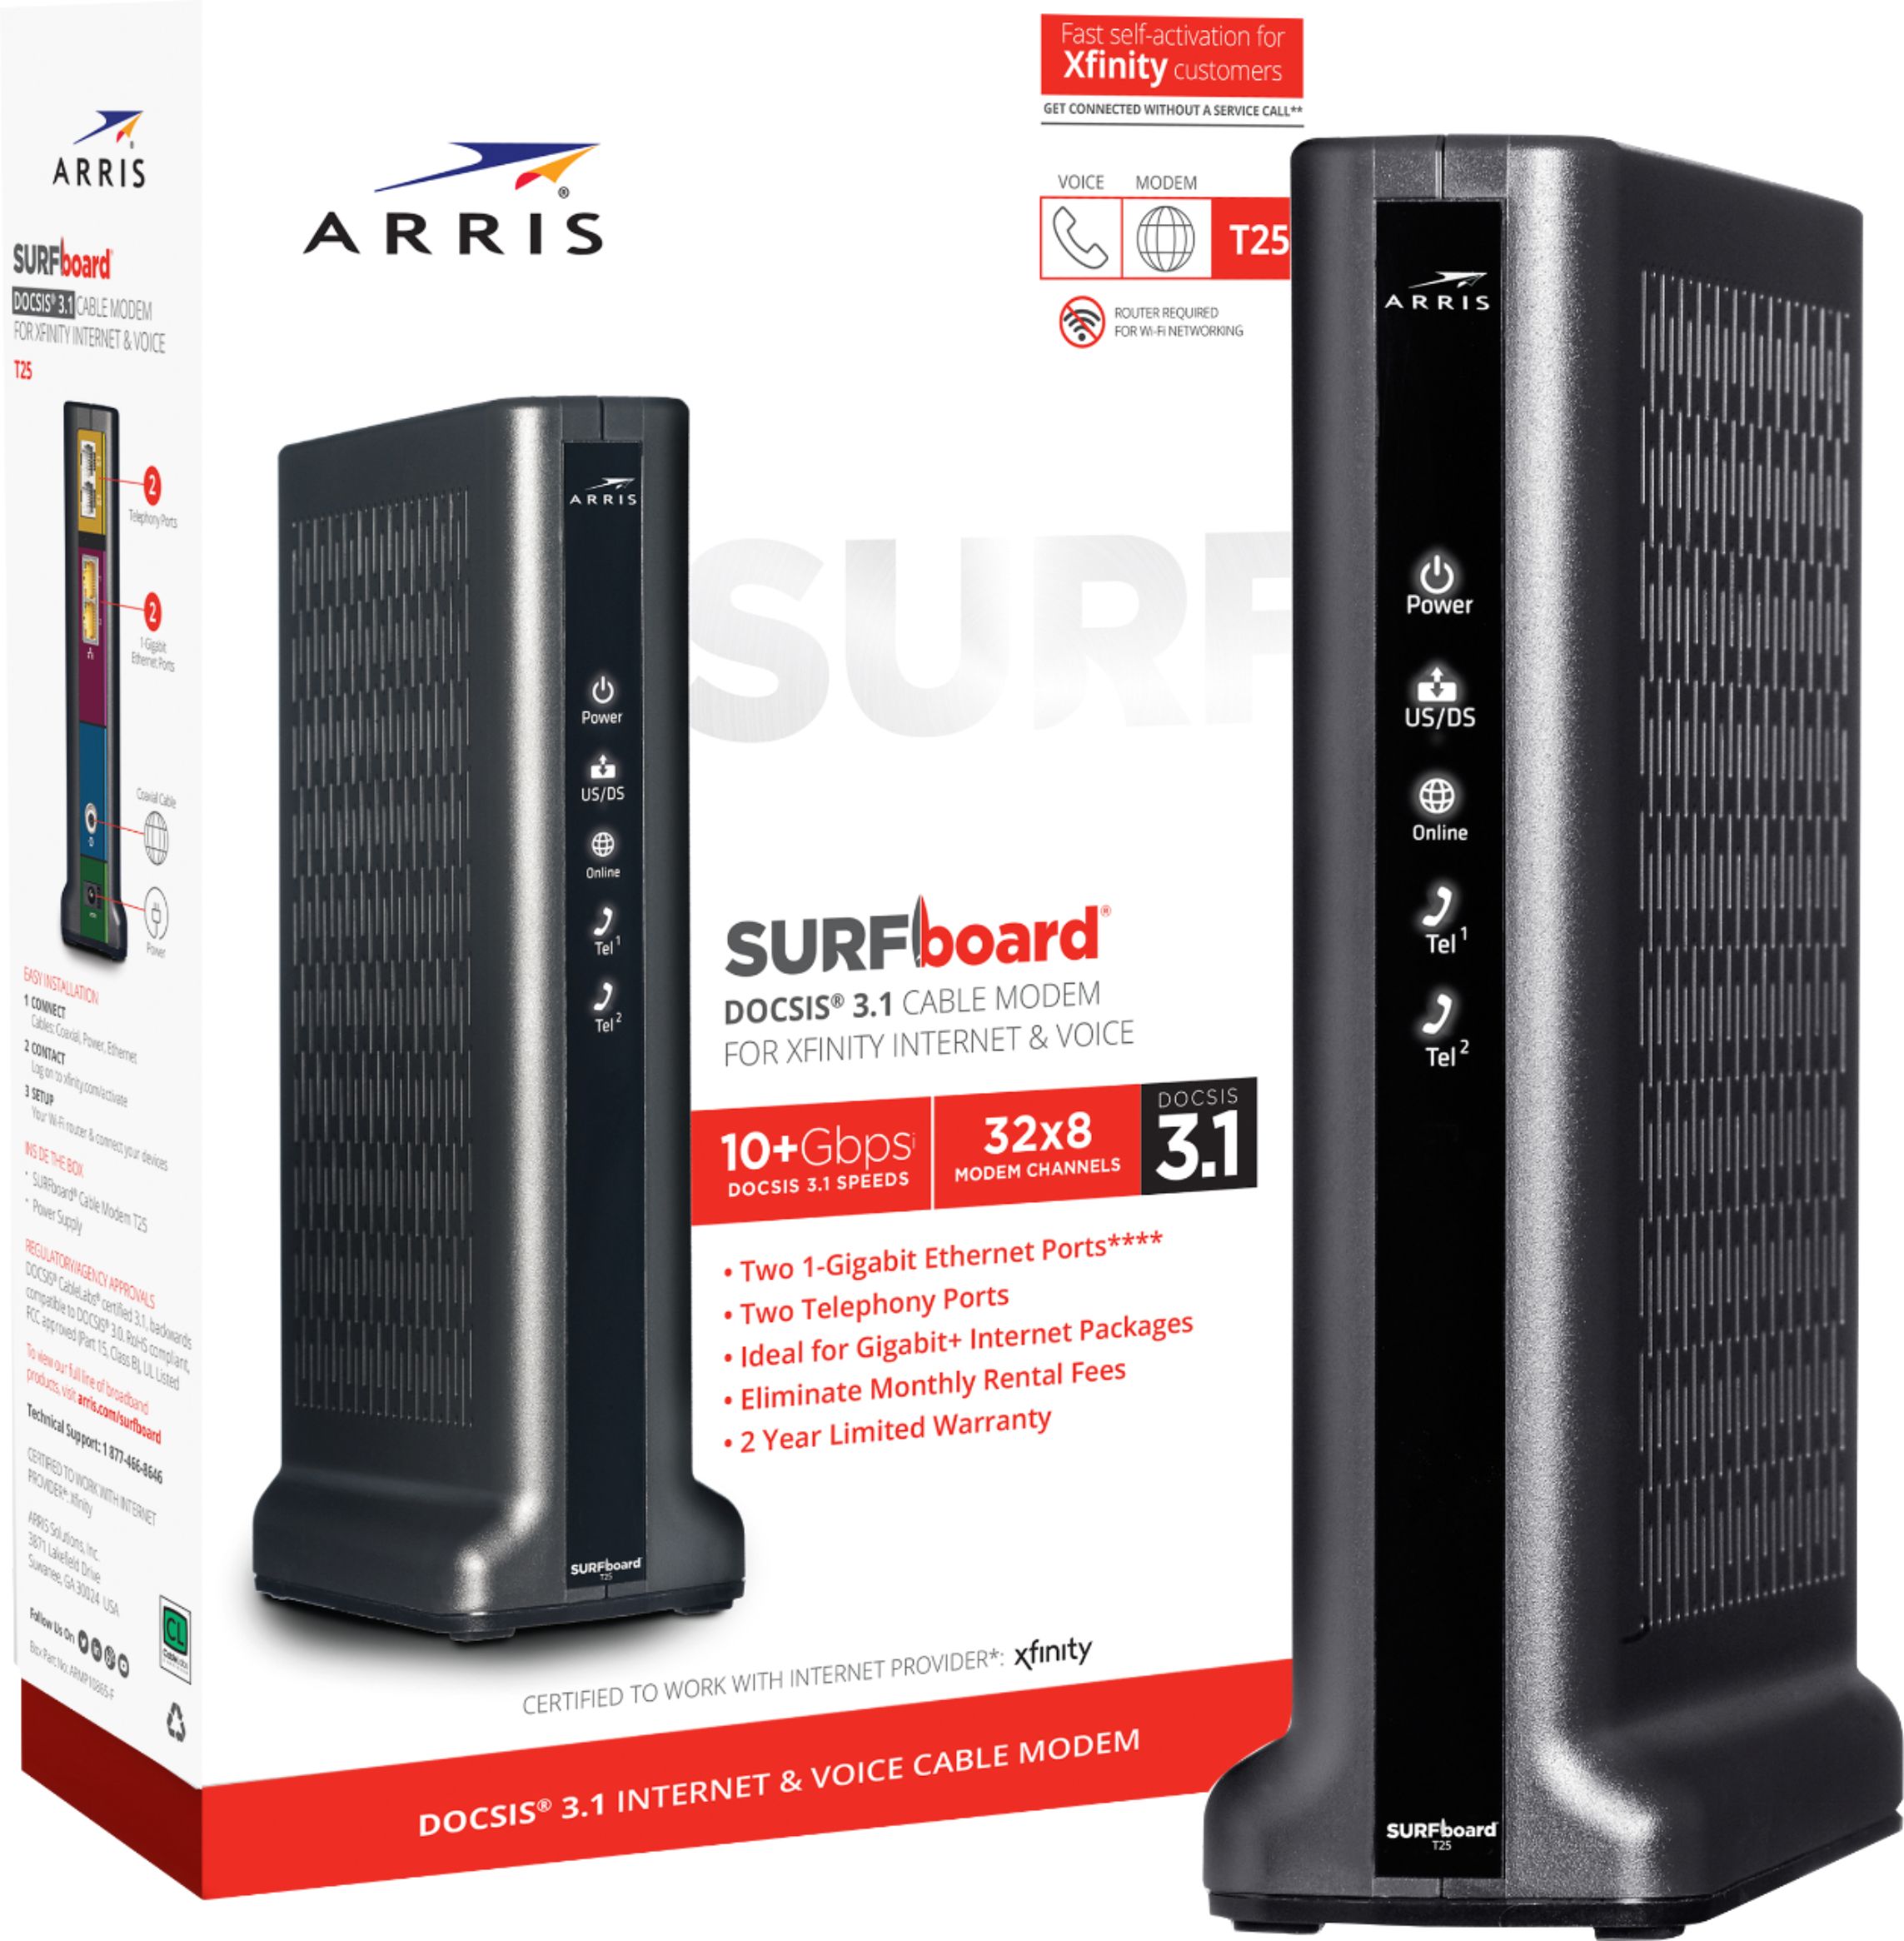 ARRIS SURFboard 3.1 Cable Modem Xfinity Voice Black T25 - Best Buy